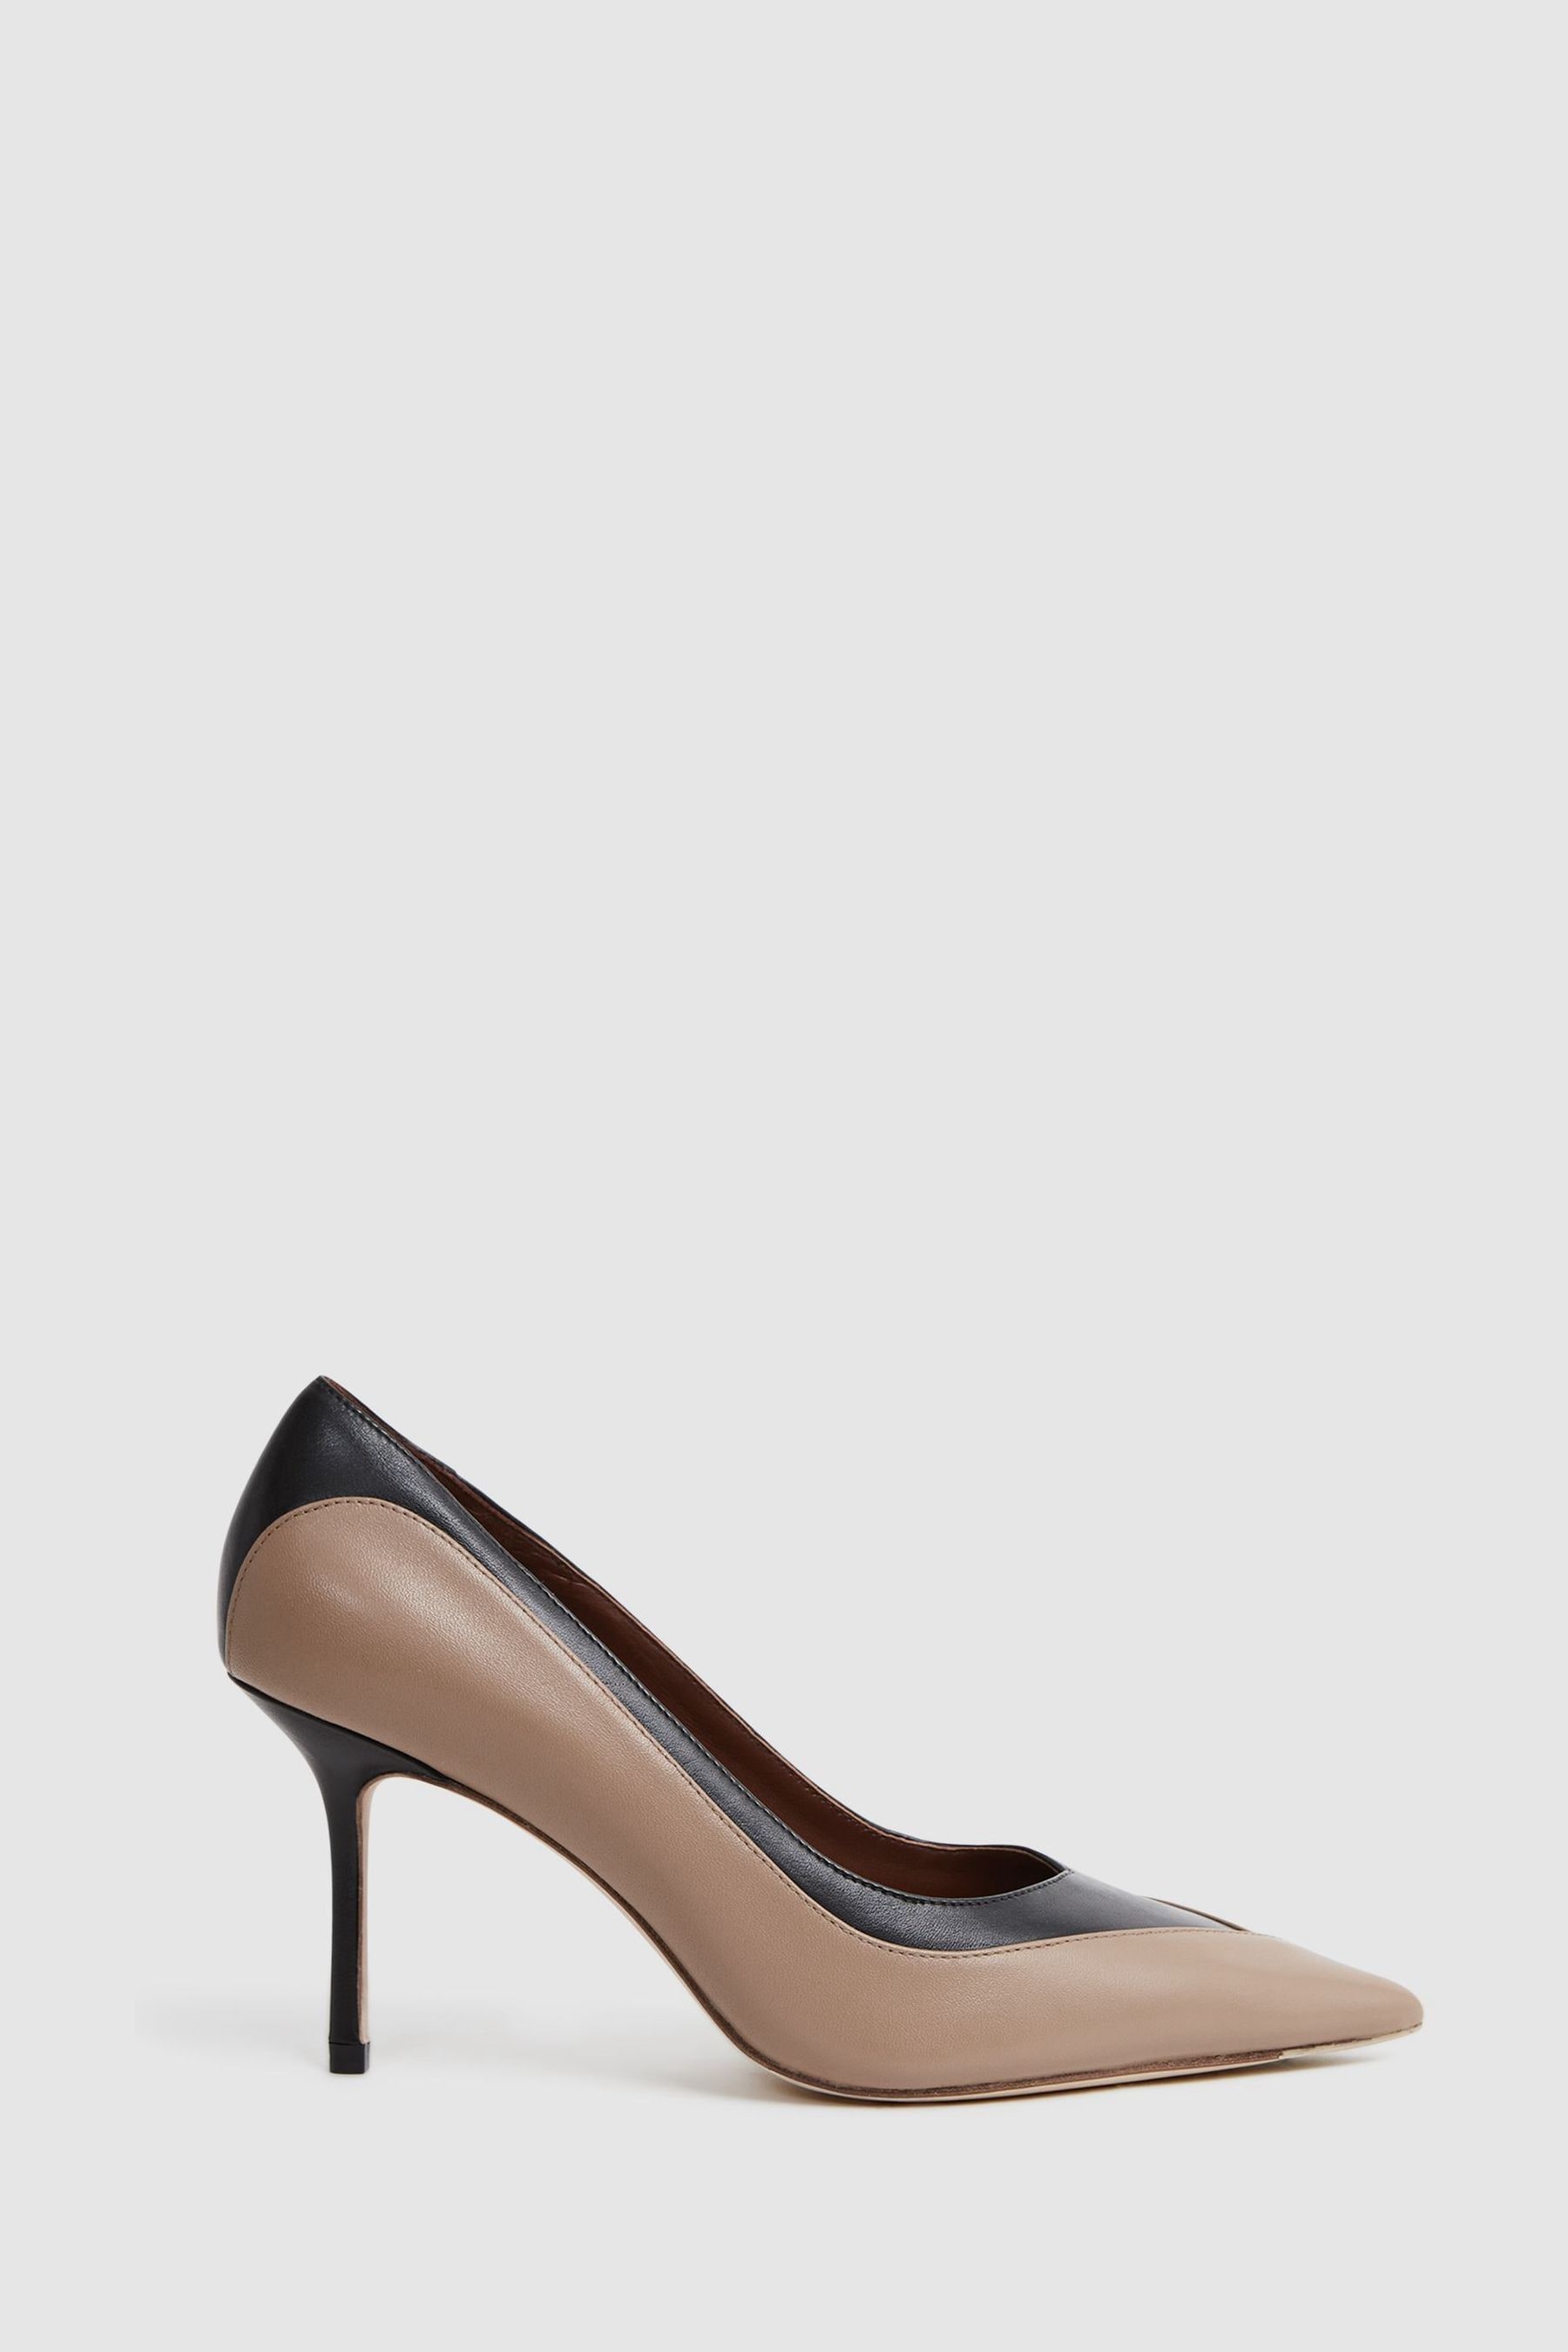 Reiss Gwyneth - Camel/black Leather Contrast Court Shoes, Uk 6 Eu 39